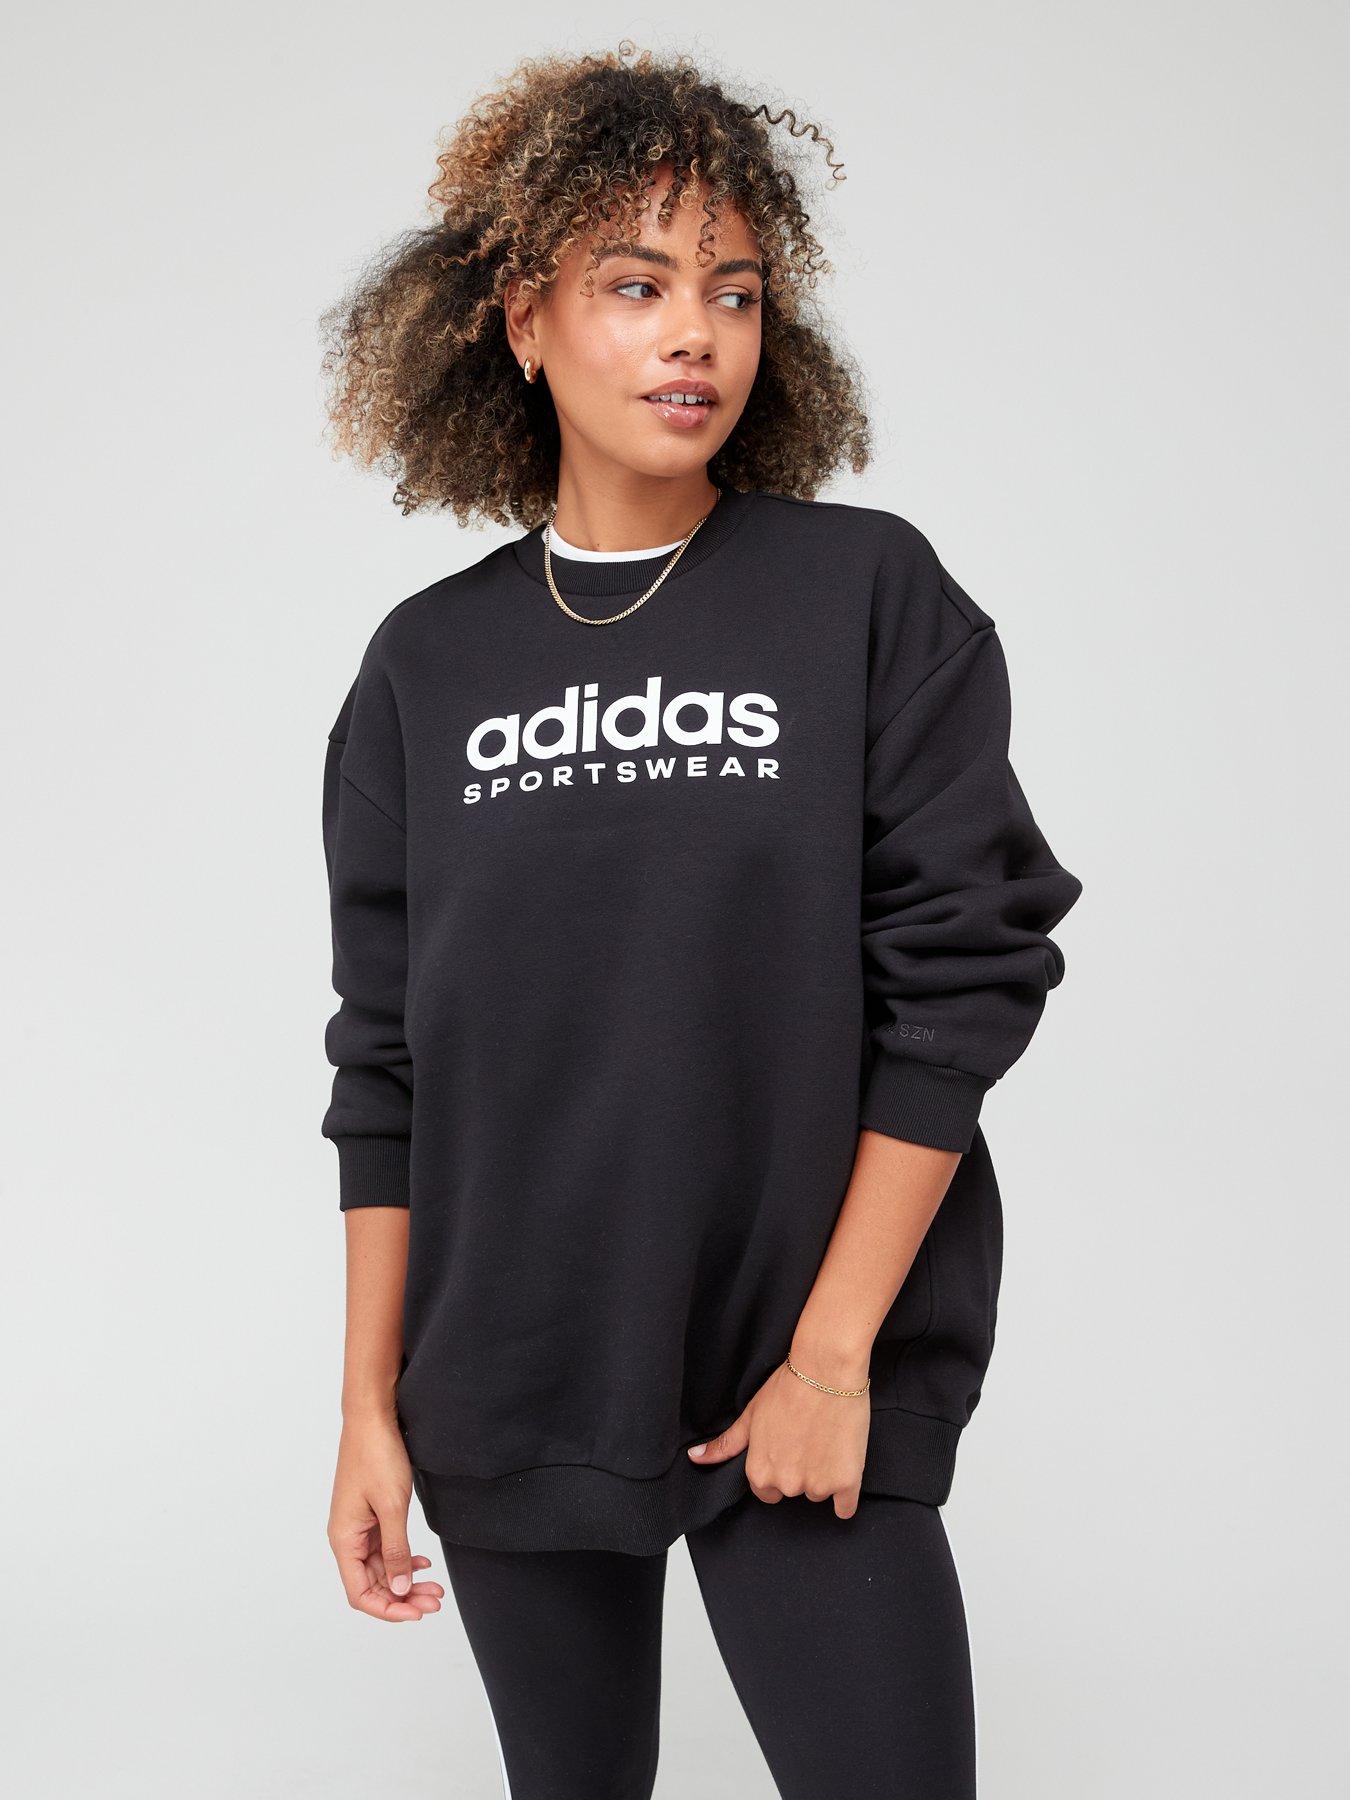 adidas Sportswear All Szn Fleece Graphic Sweatshirt - Black